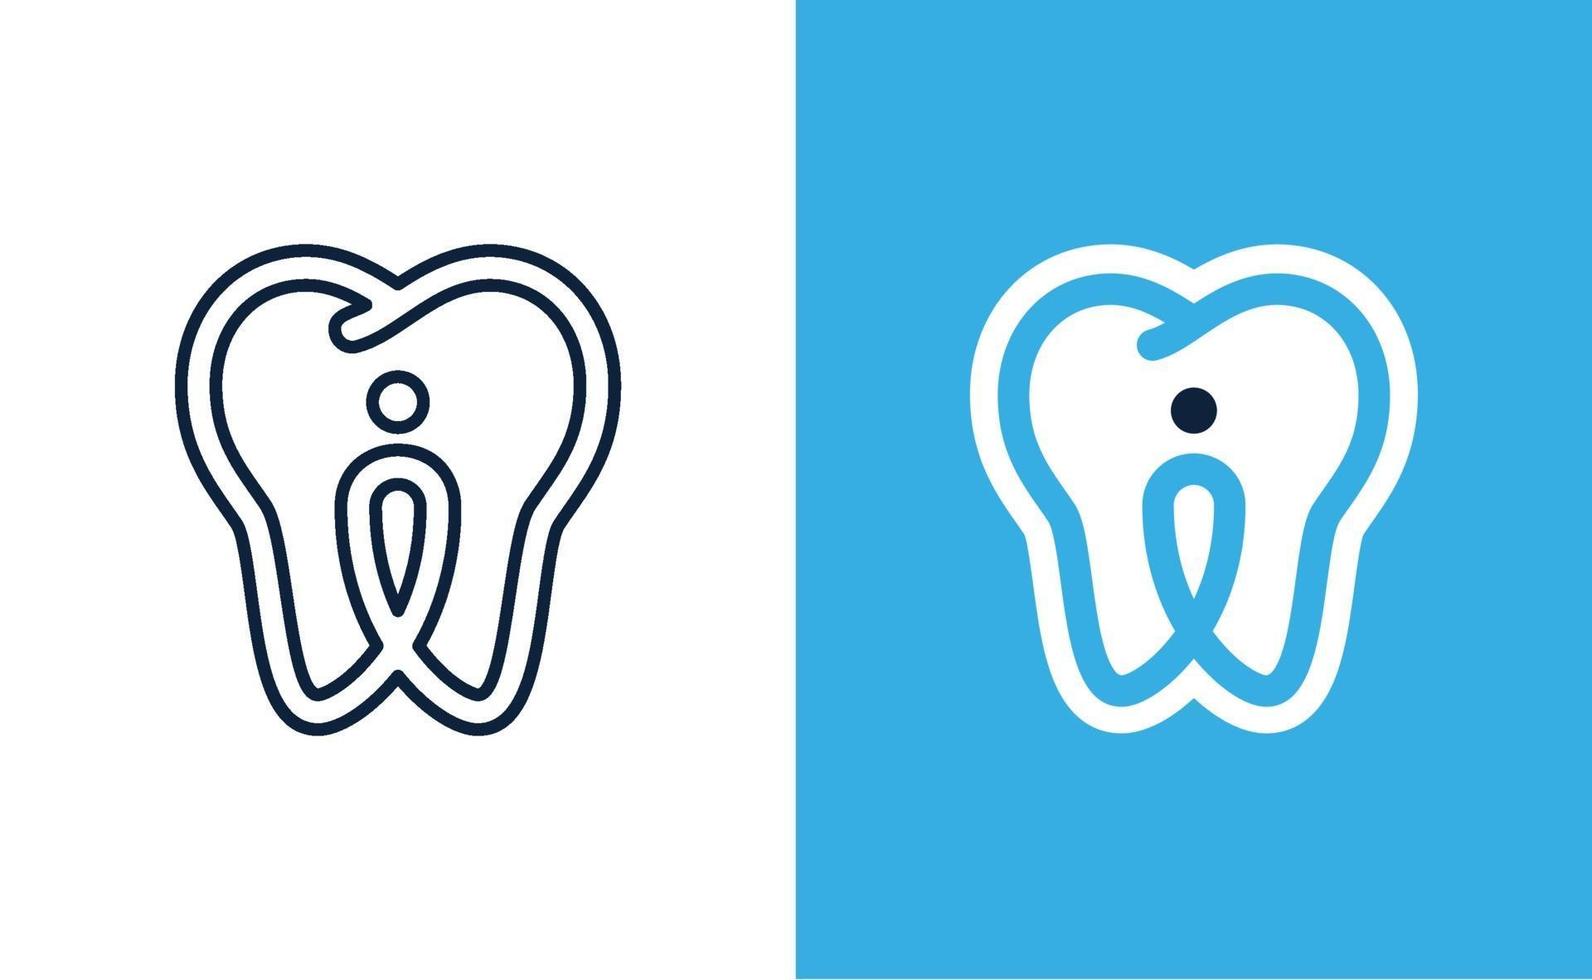 dente dentale e logo del dente vettore